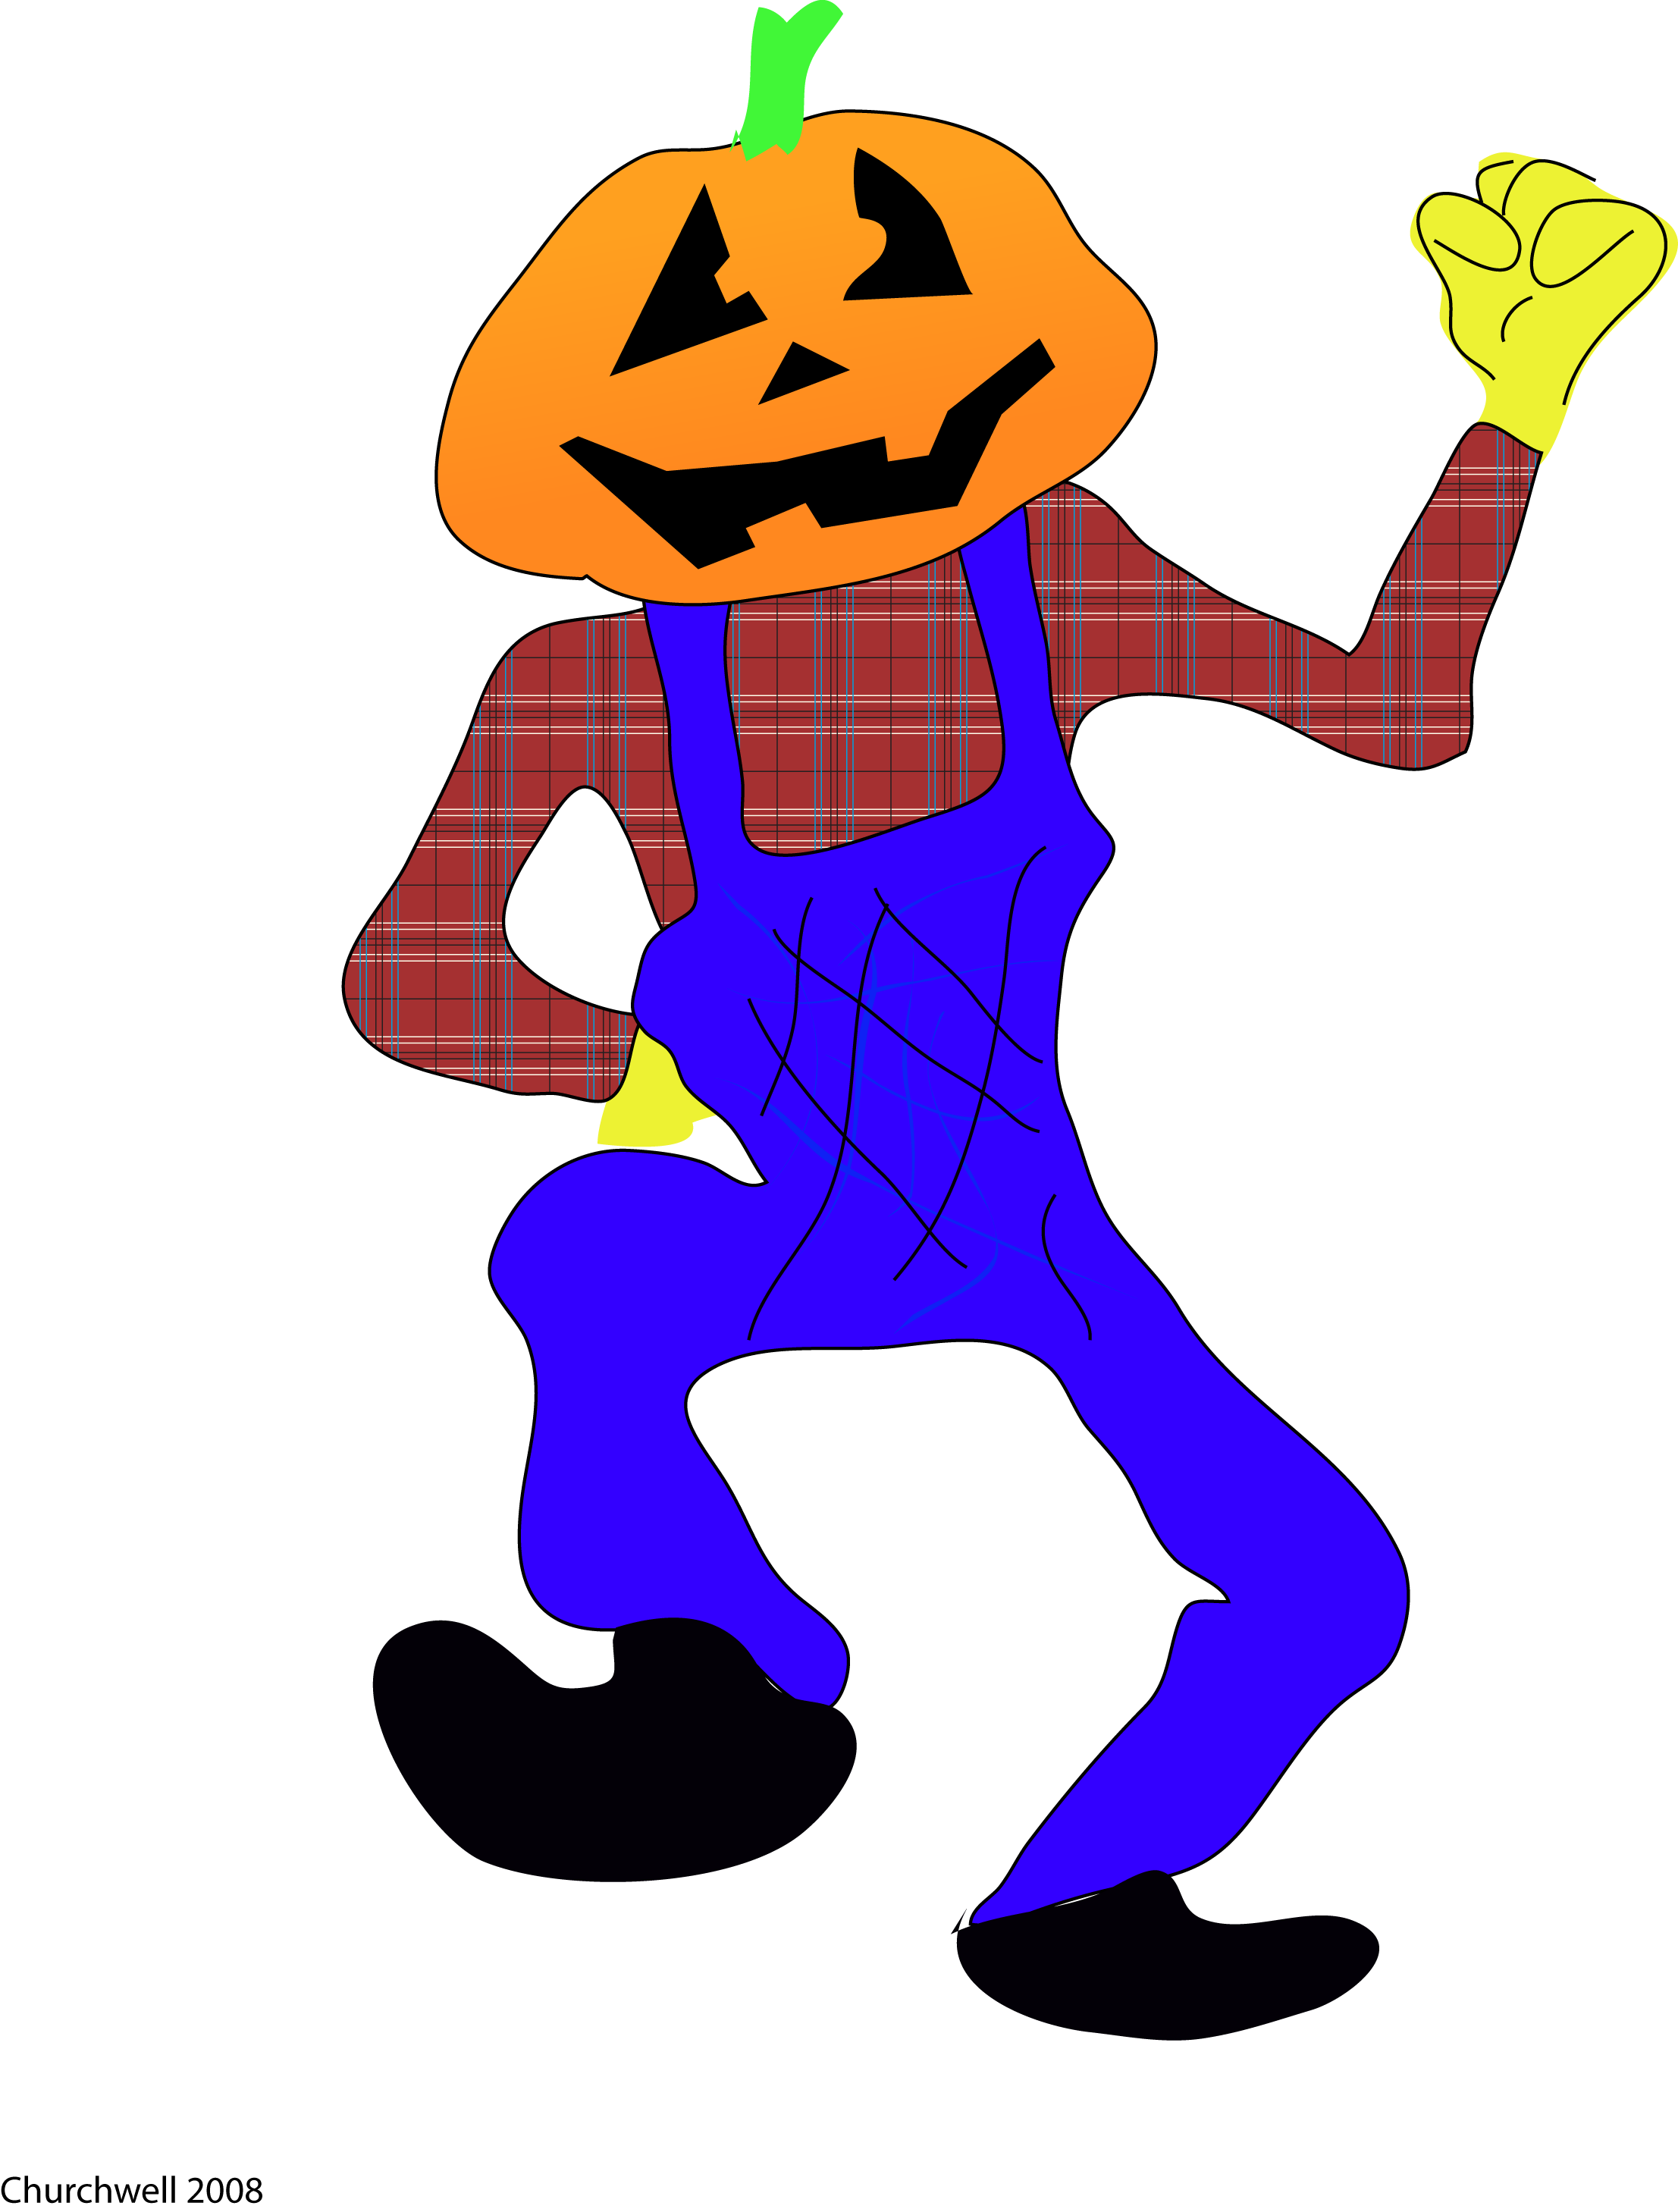 Pumpkin Scarecrow - 2D Resources - ShareCG